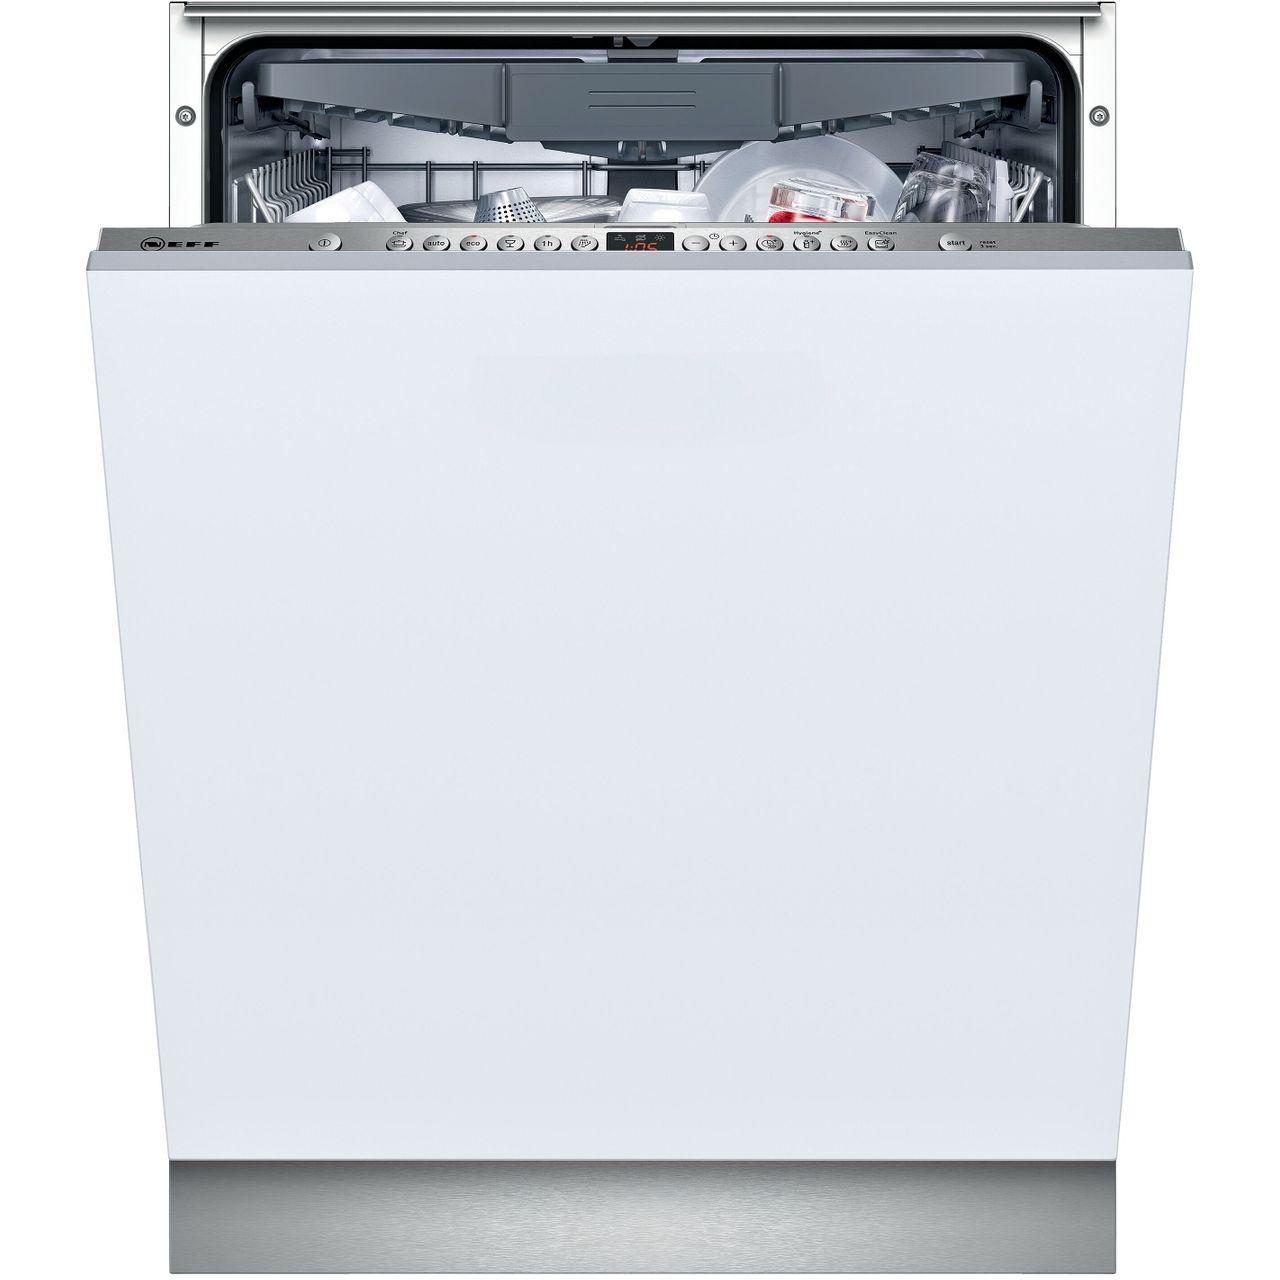 *Ex Display* Neff S713N60X1G 60cm Fully Integrated Dishwasher